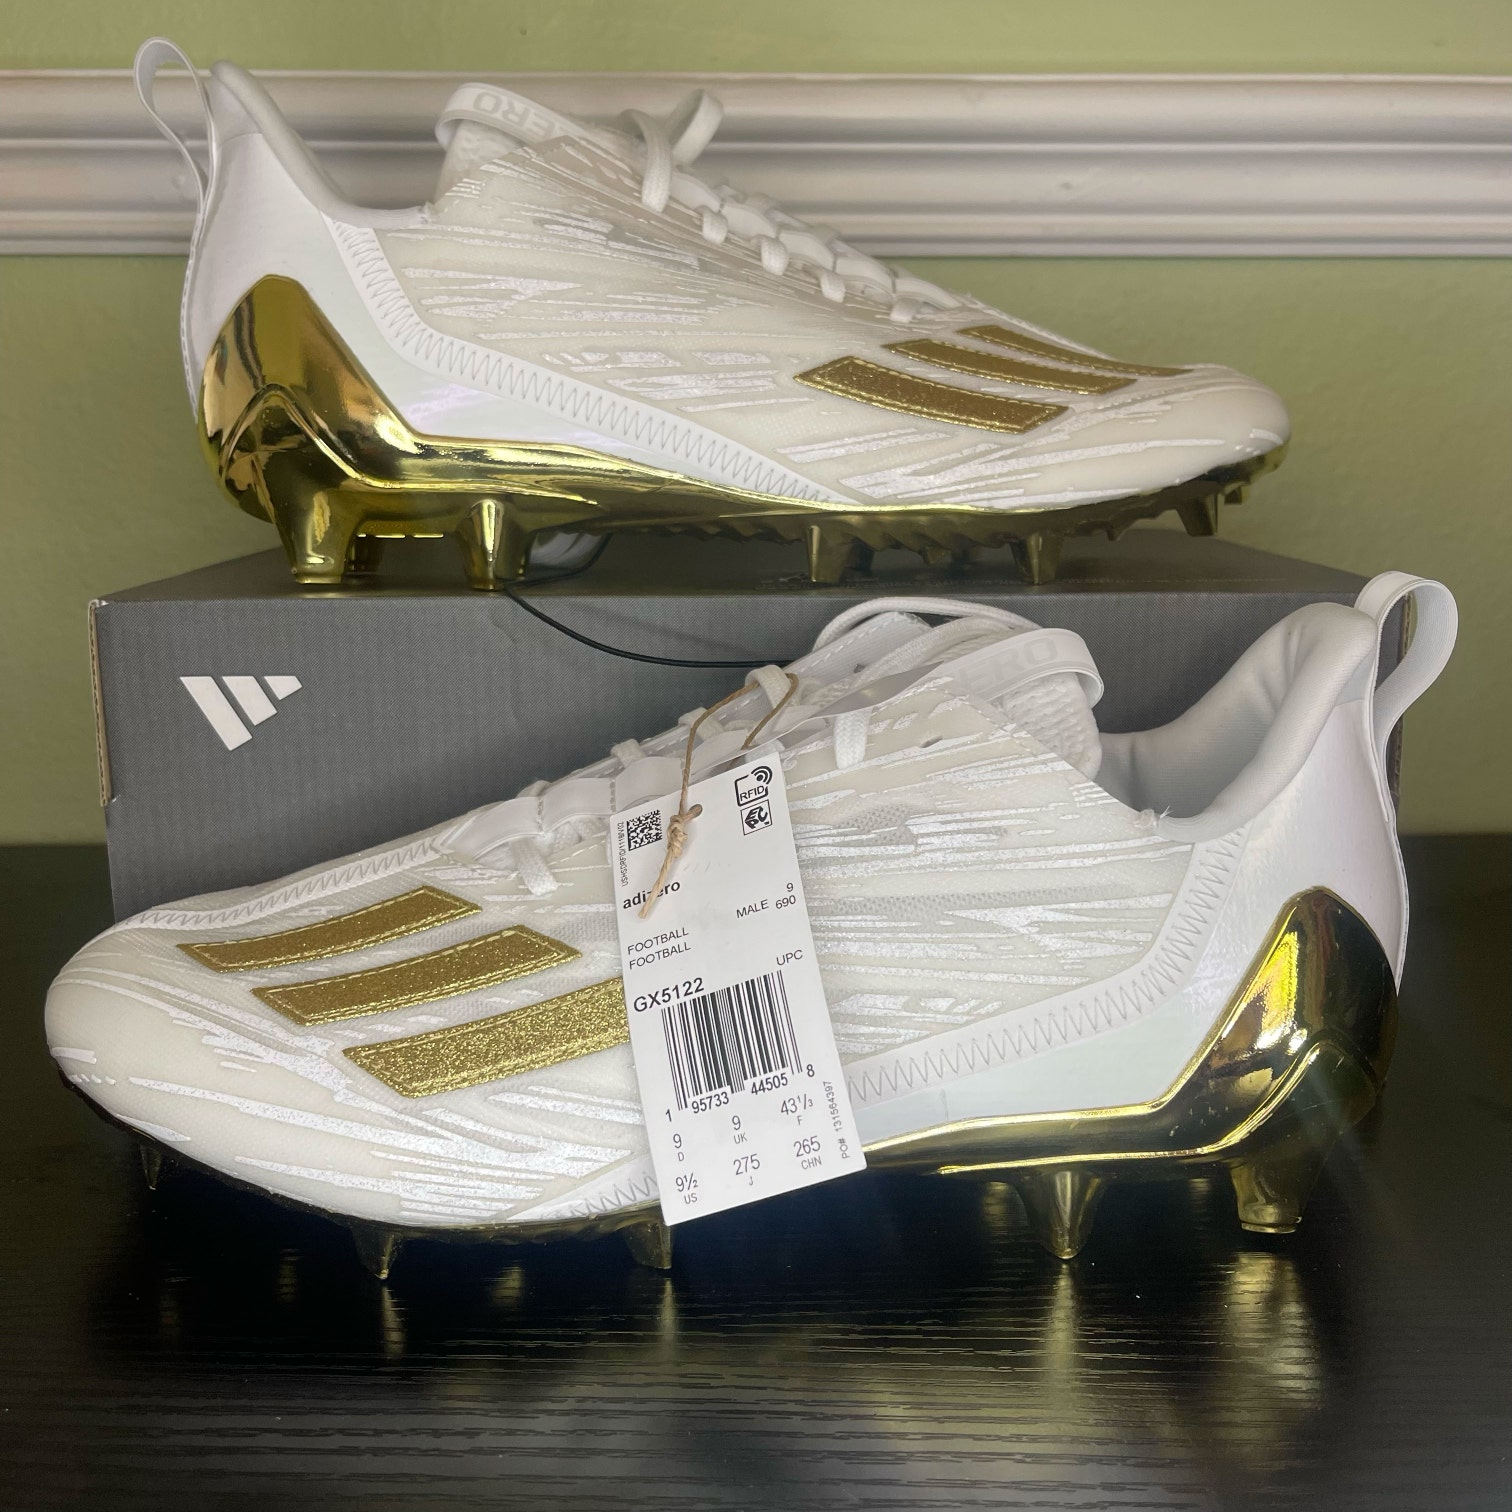 adidas Men’s adizero Football Lacrosse Cleats White Gold Metallic Size 9.5 GX5122